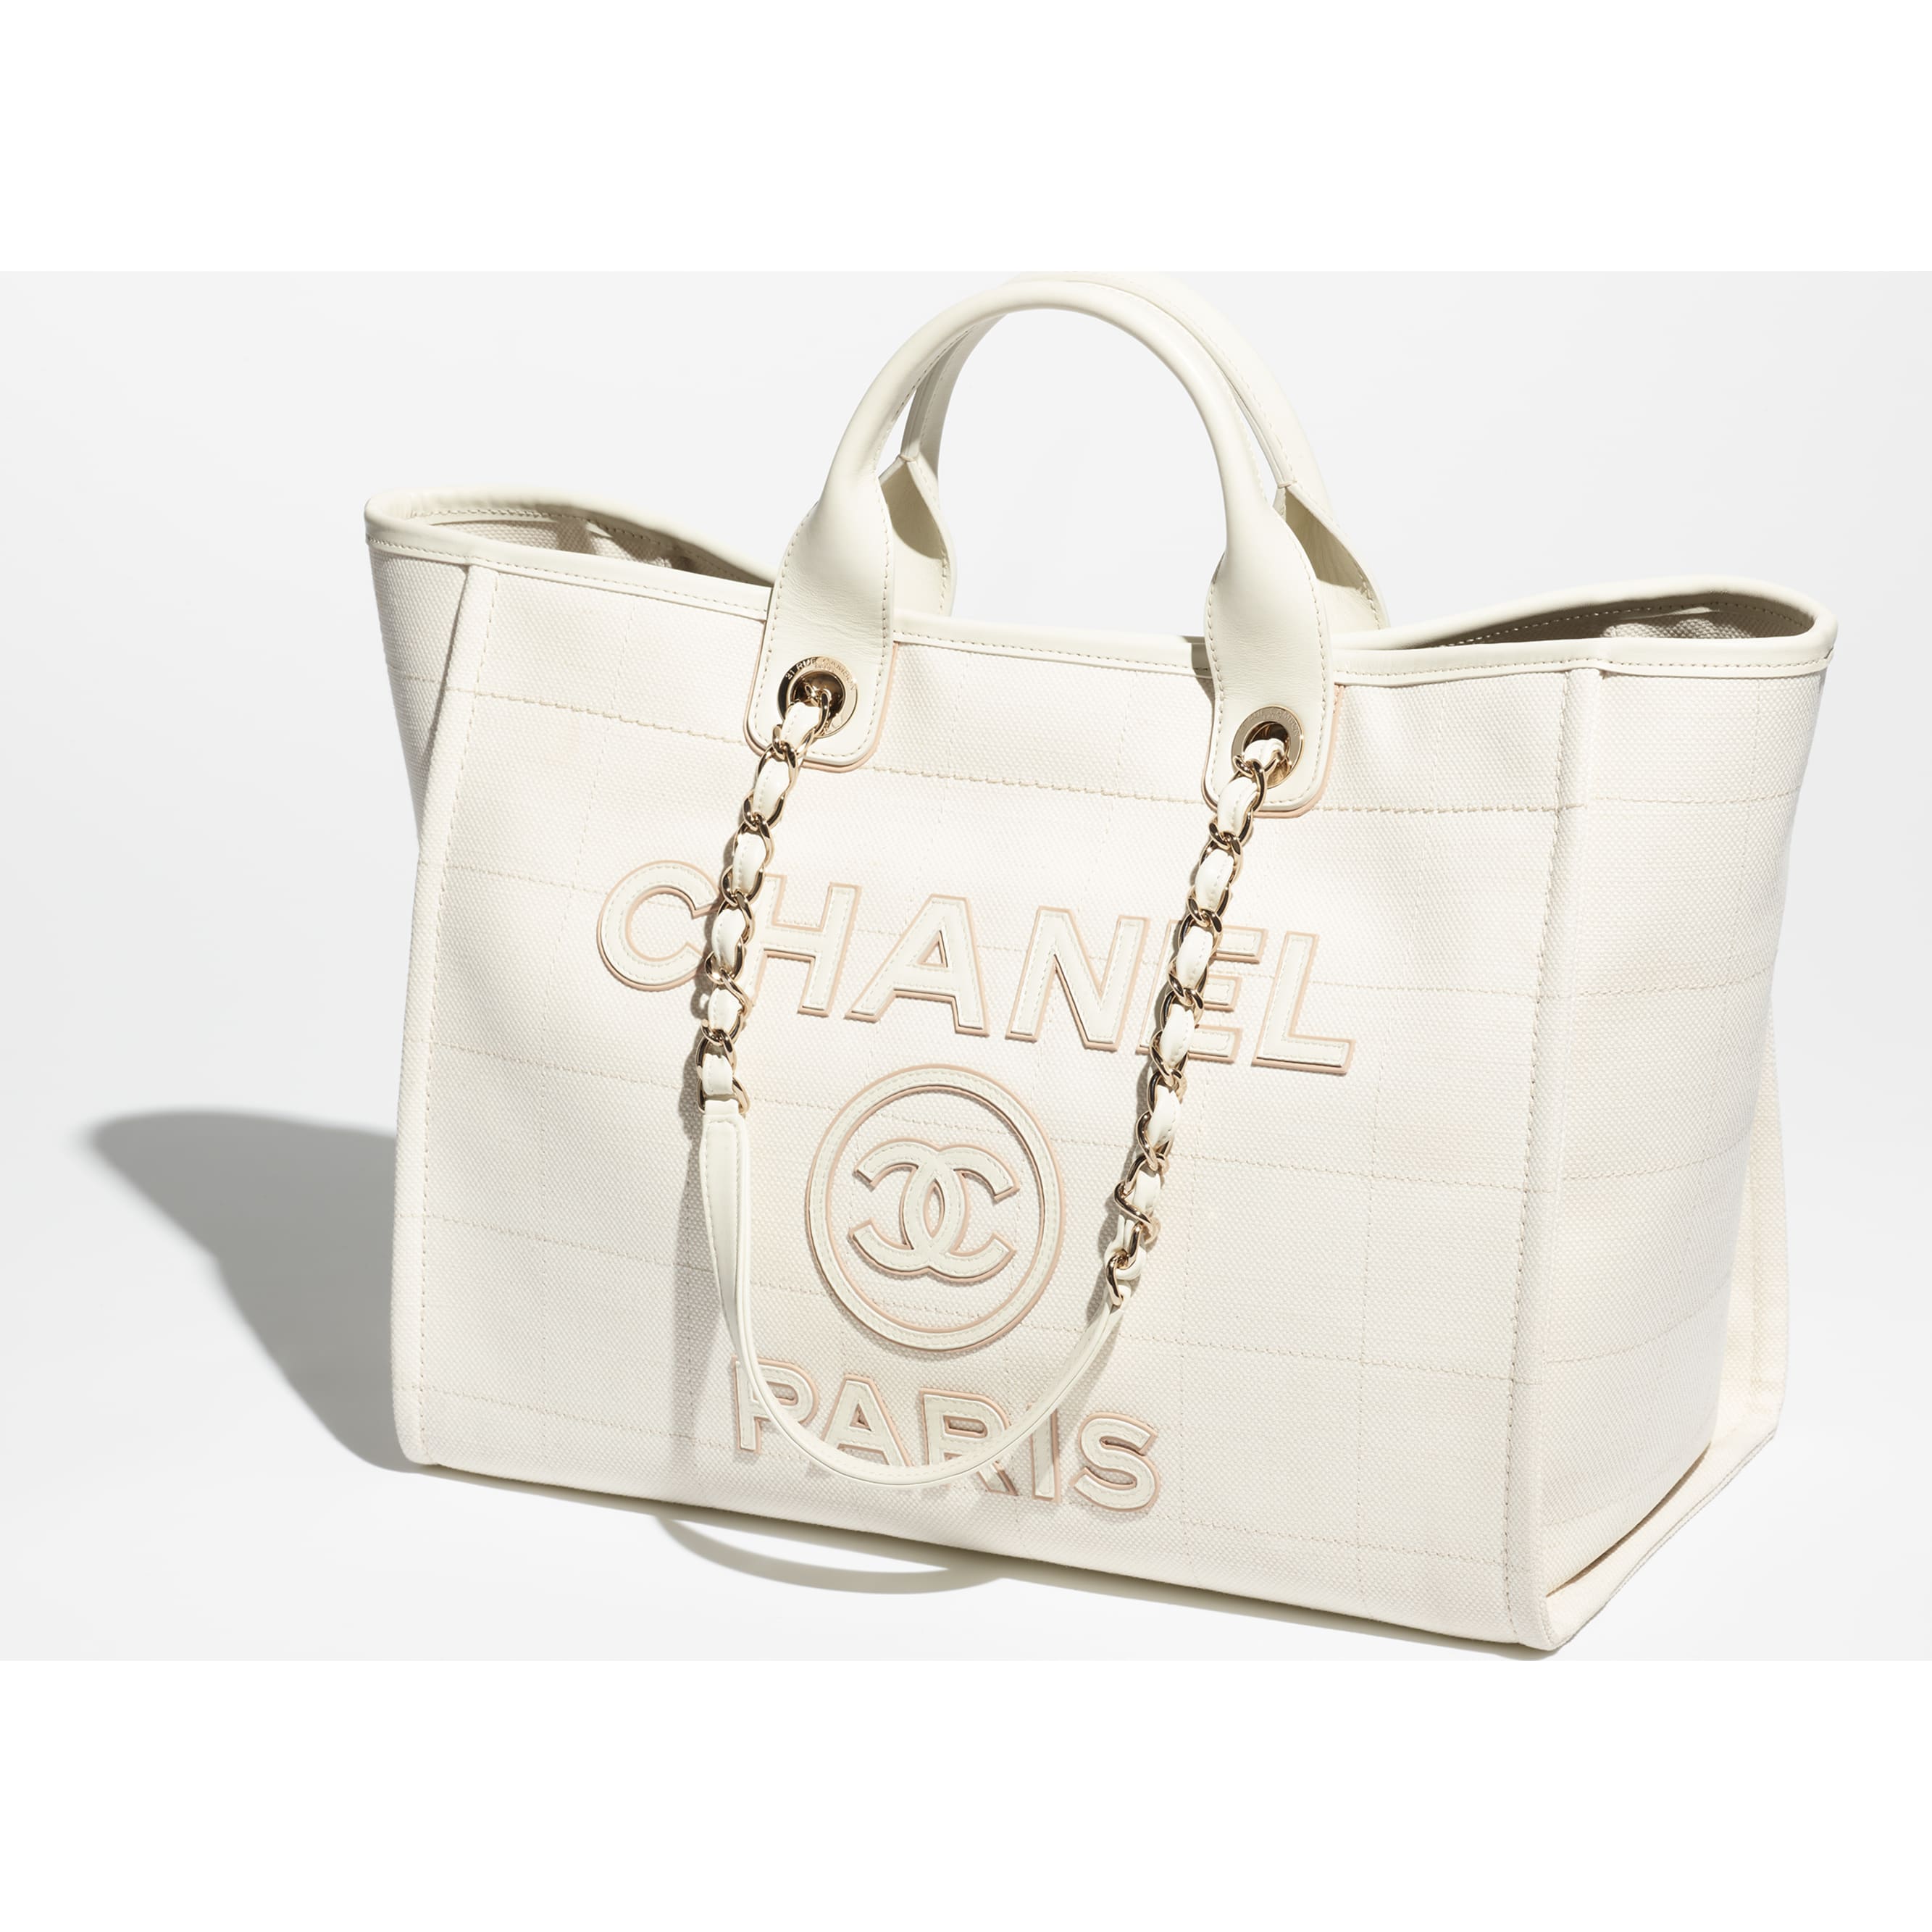 Chanel Large Shopping Bag Cotton, Calfskin & Gold-Tone Metal A66941 B10017  NL722 Ecru & Light Beige 